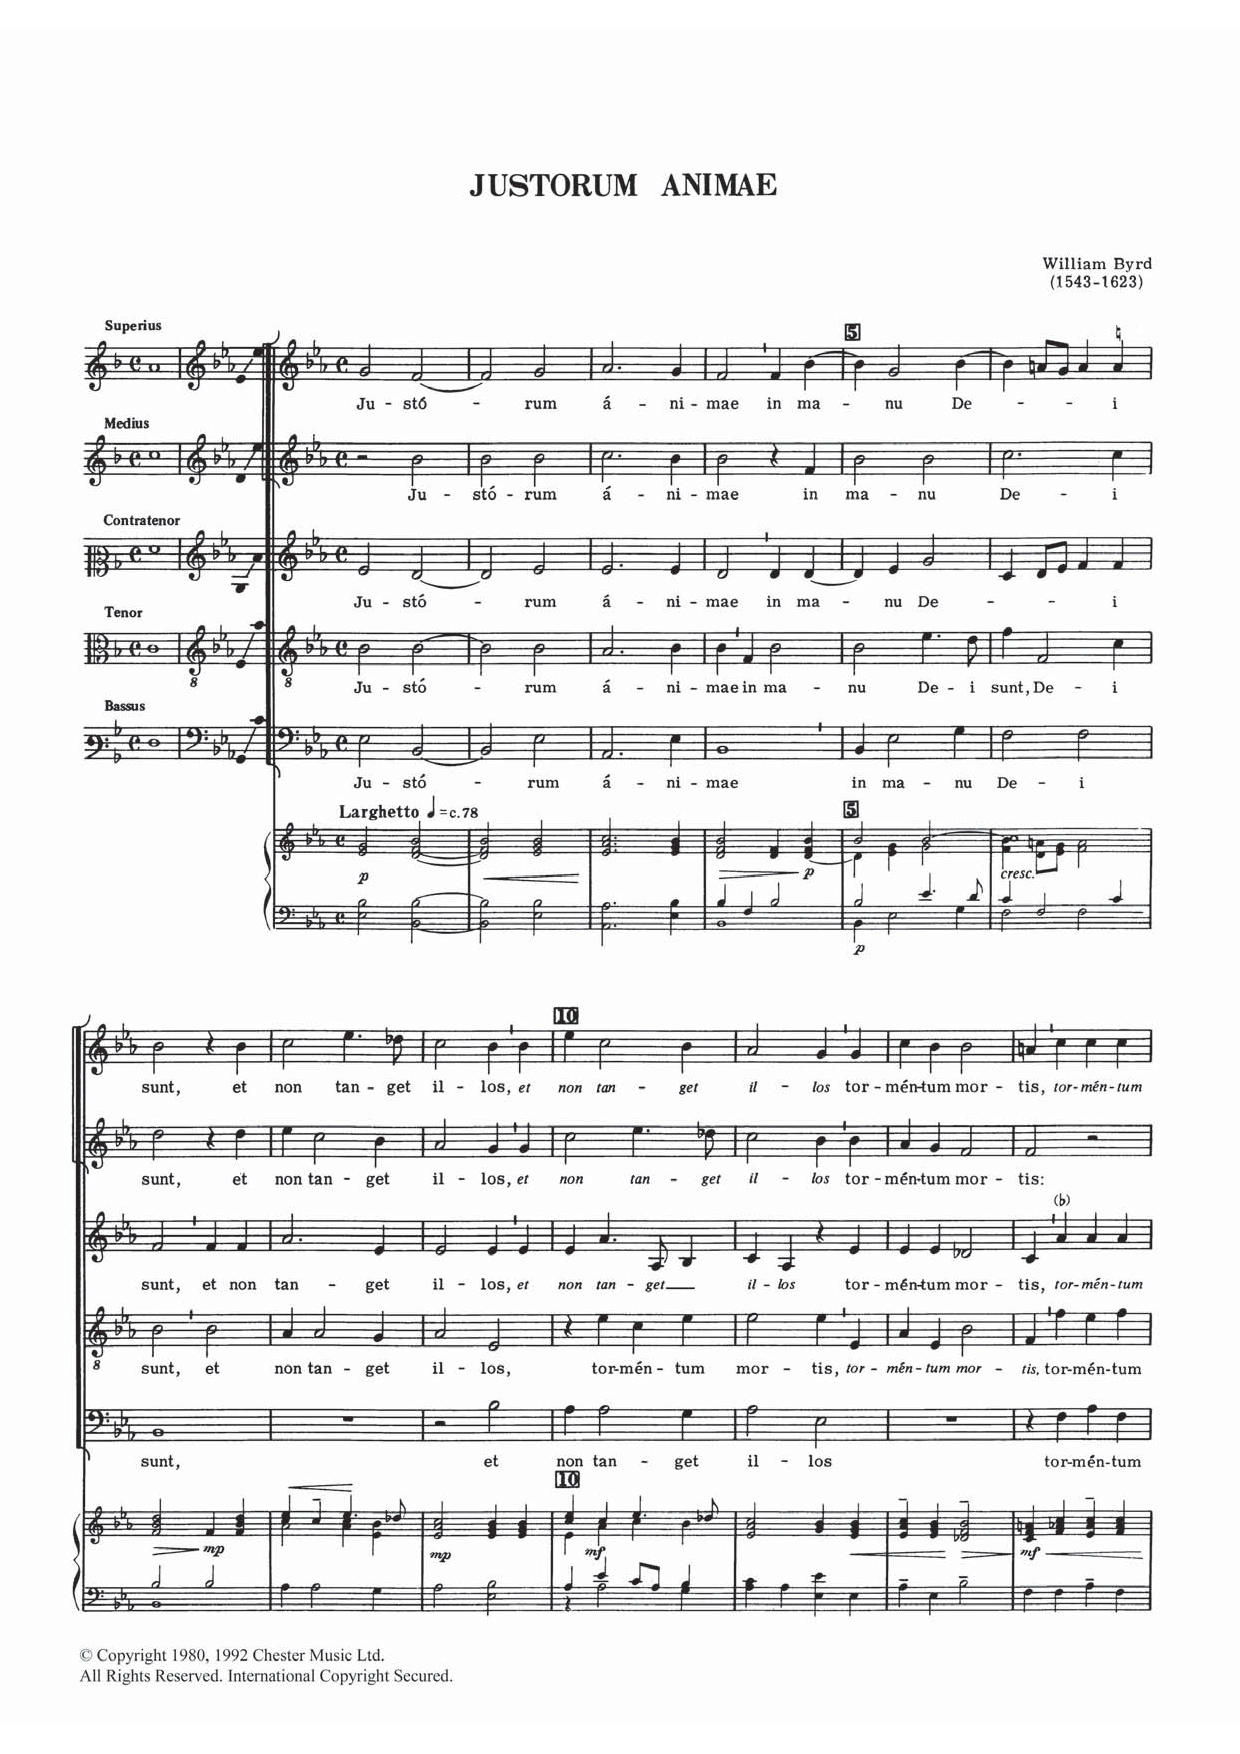 William Byrd Justorum Animae Sheet Music Notes & Chords for Choral SAATB - Download or Print PDF